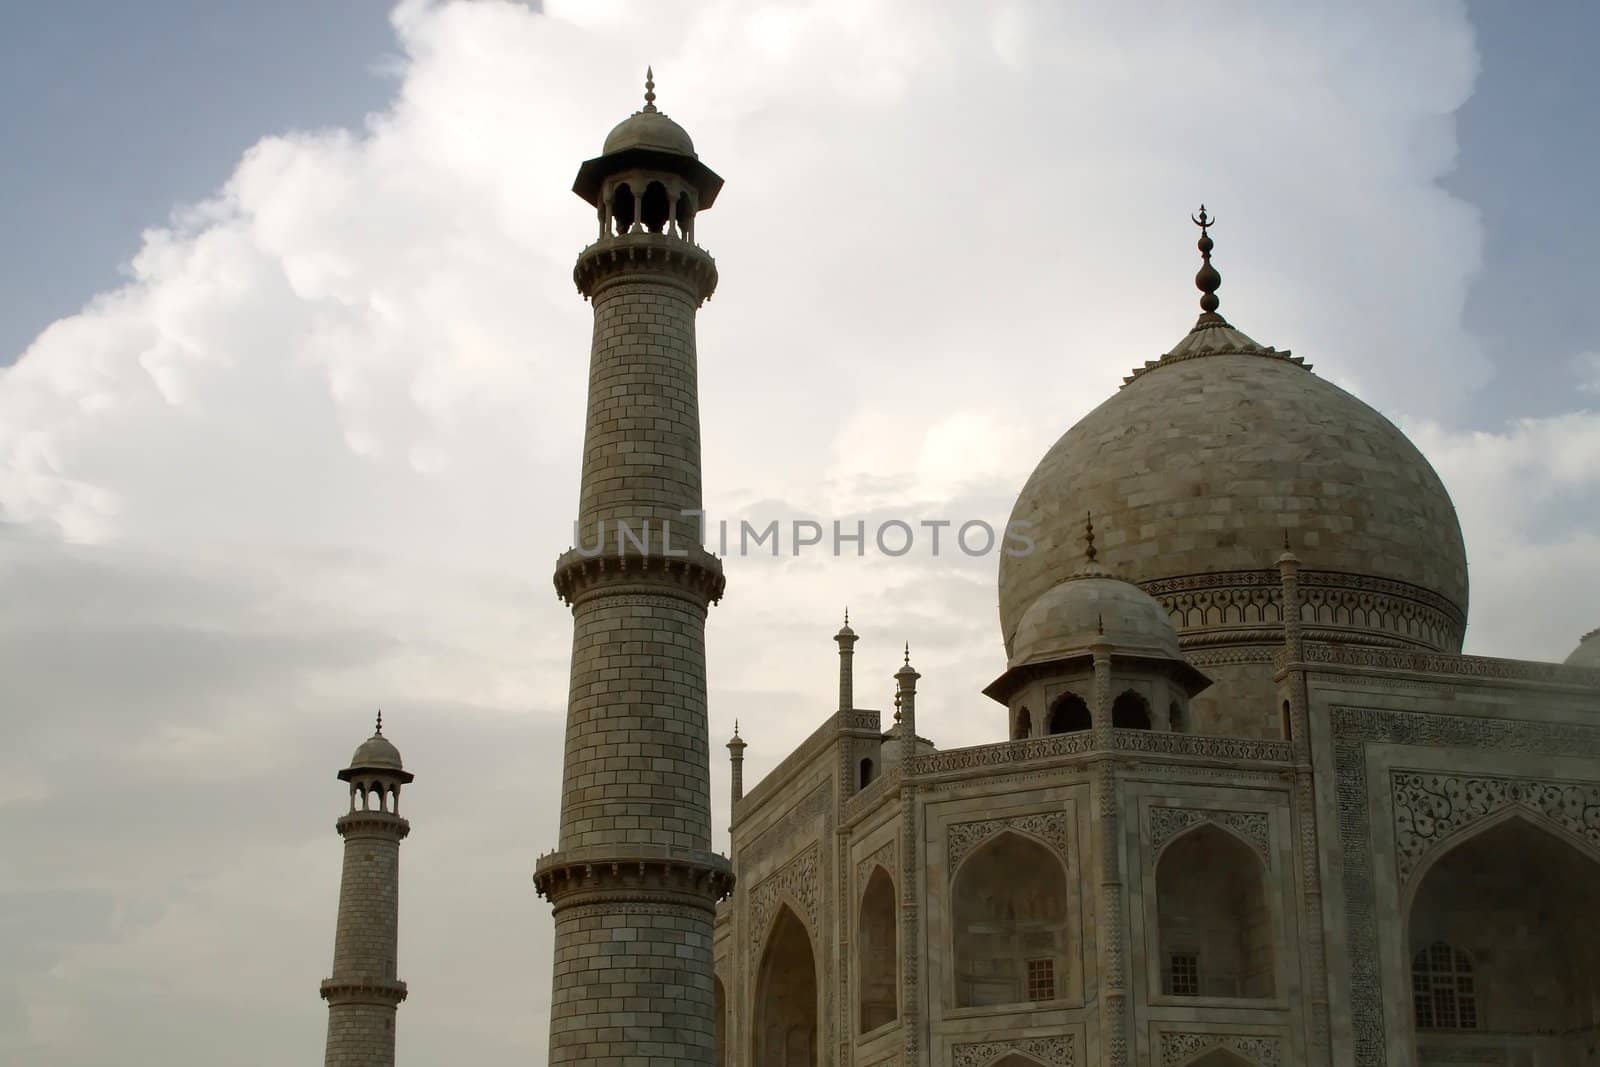 Unusual view of the Taj Mahal in Agra India